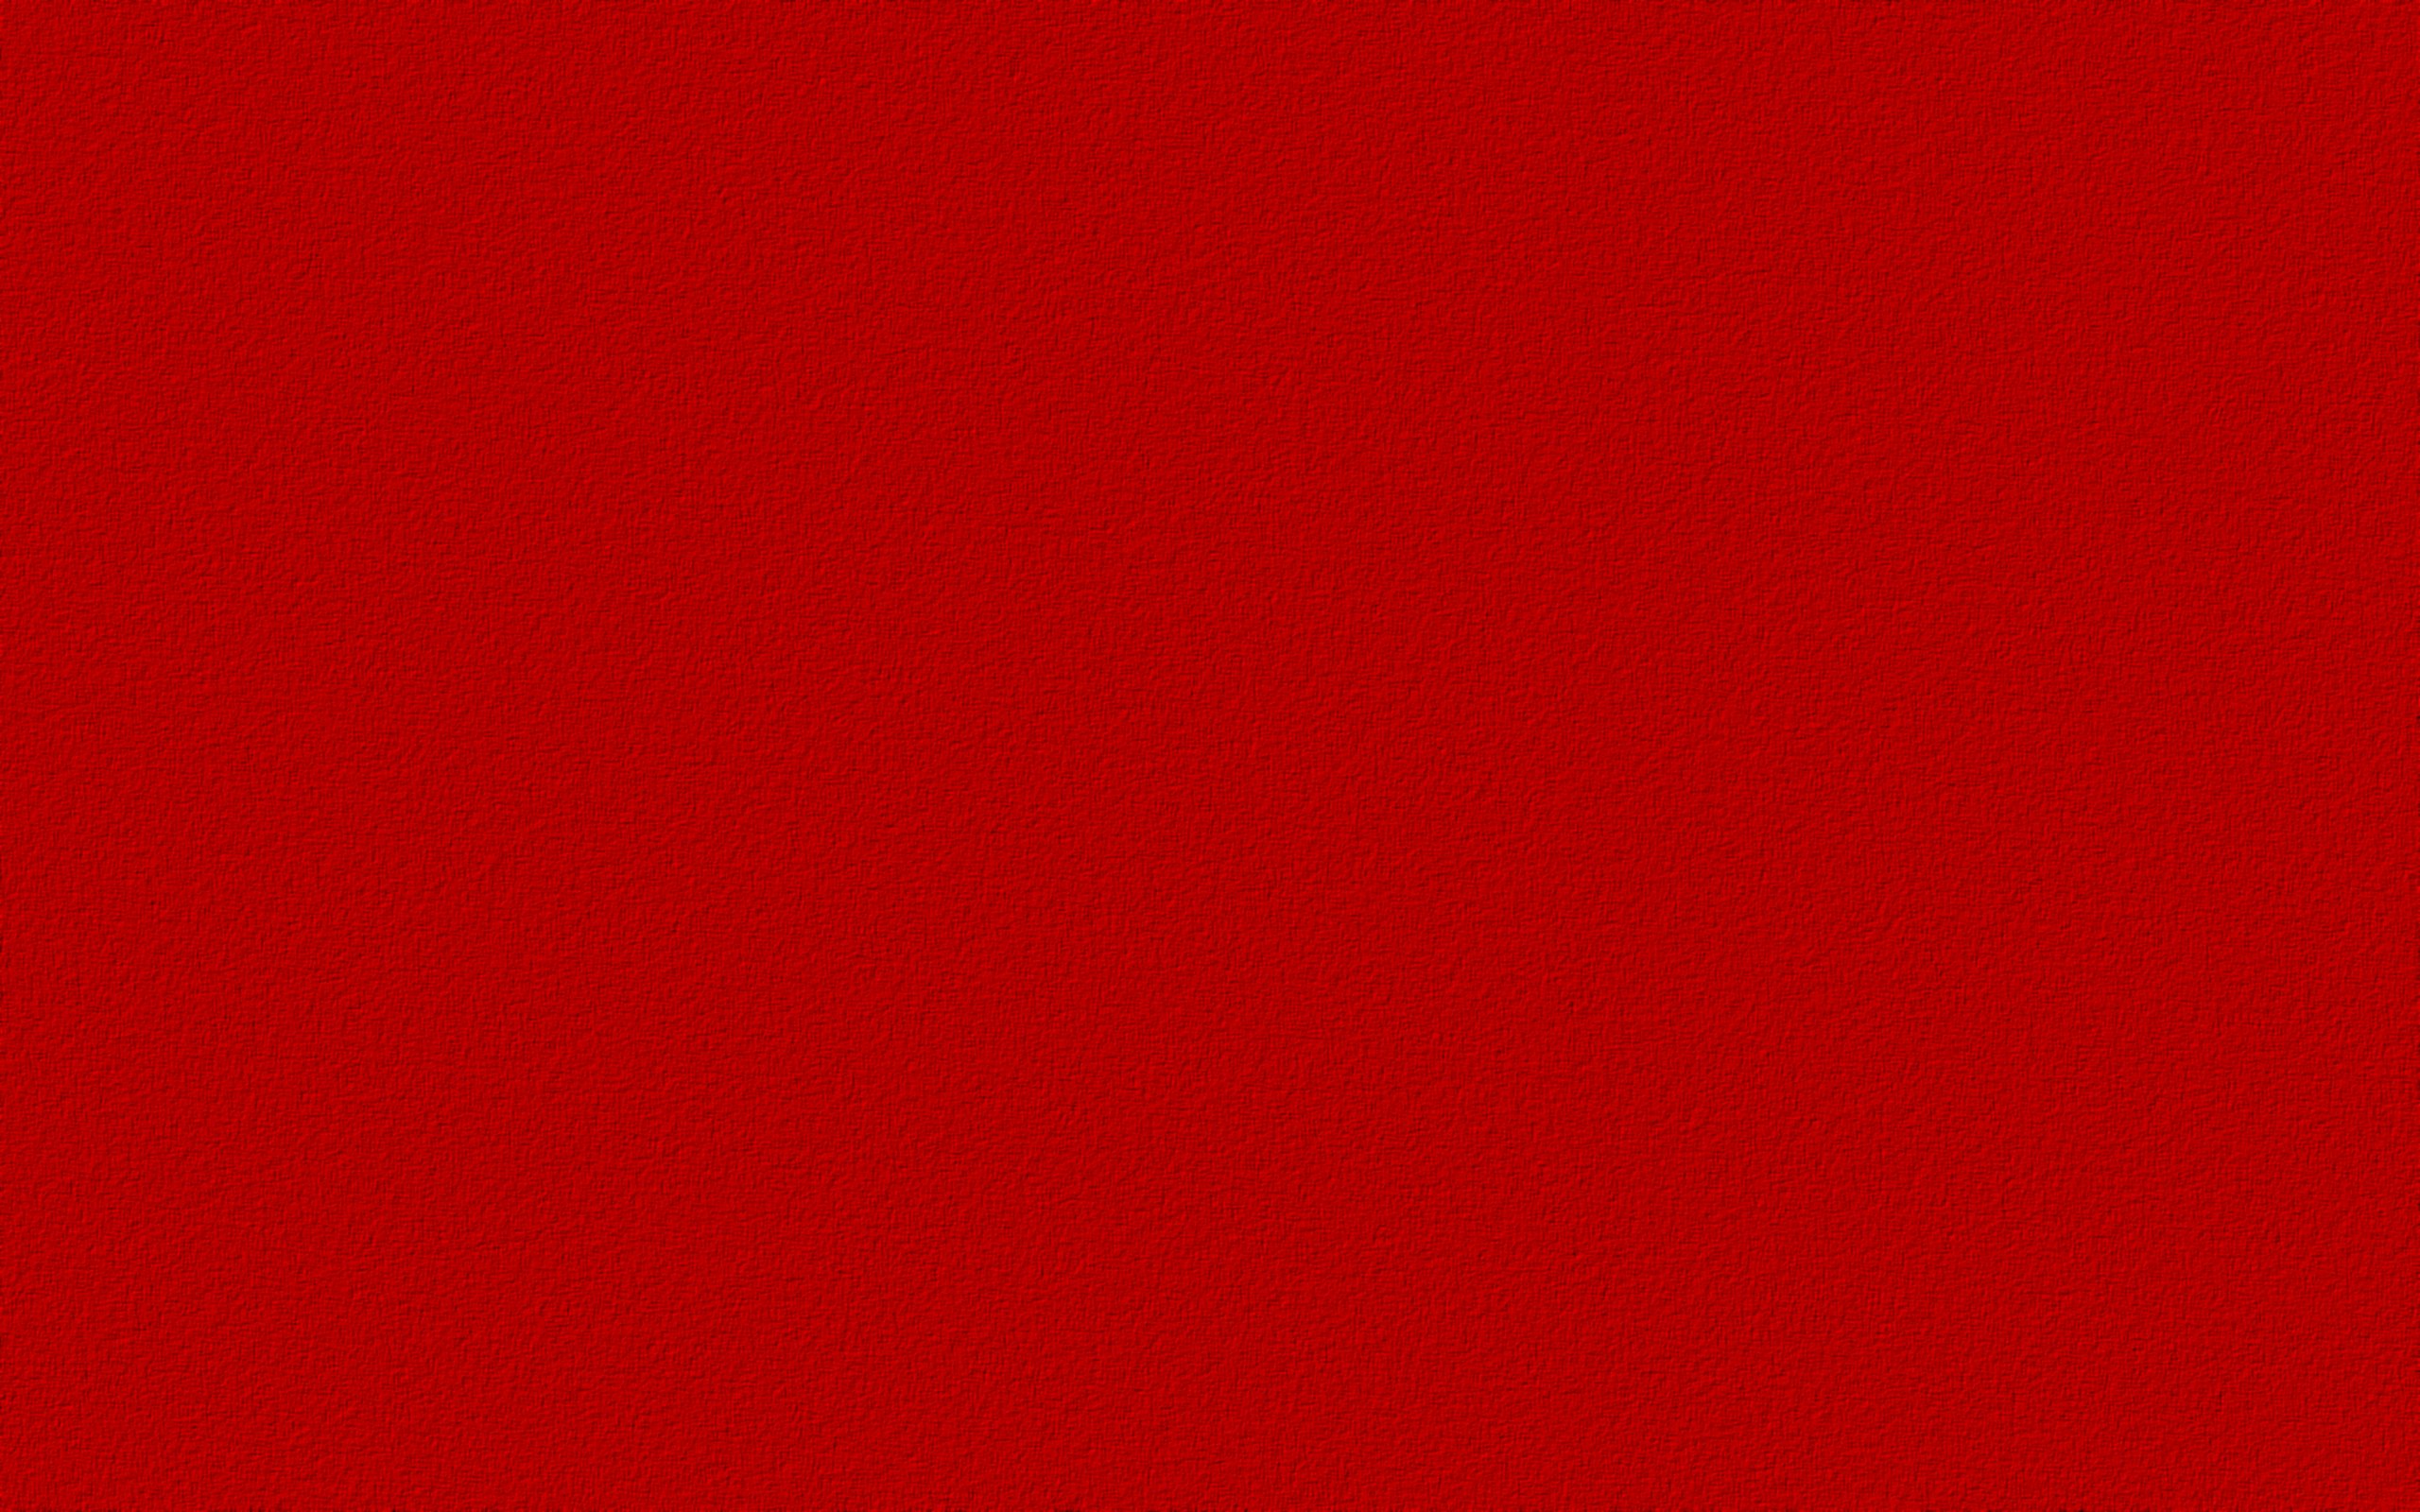 Red 2142 2560 x 1600   WallpaperLayercom